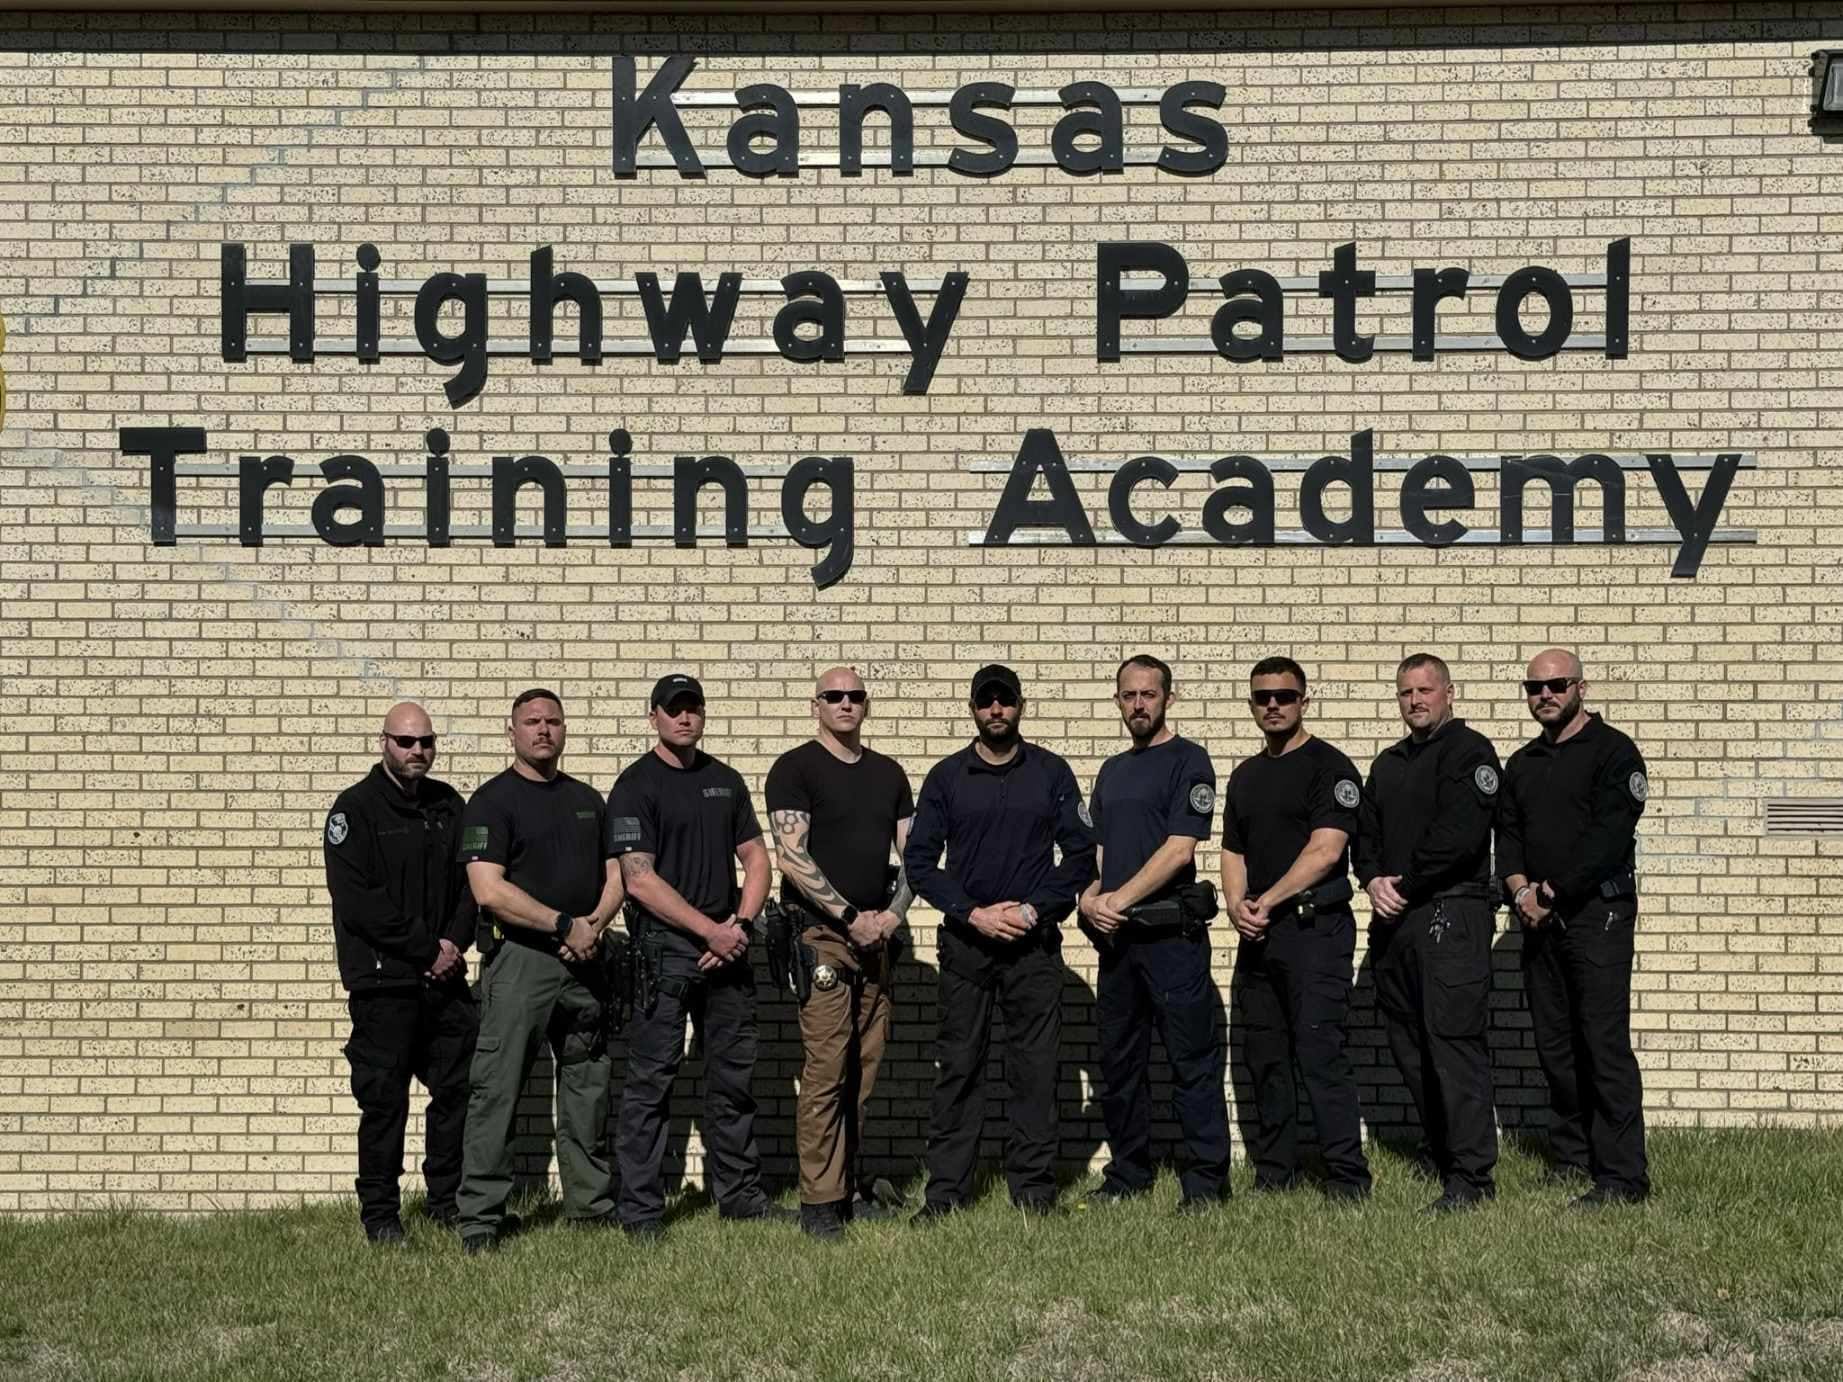 Deputies Graduate from SWAT Training